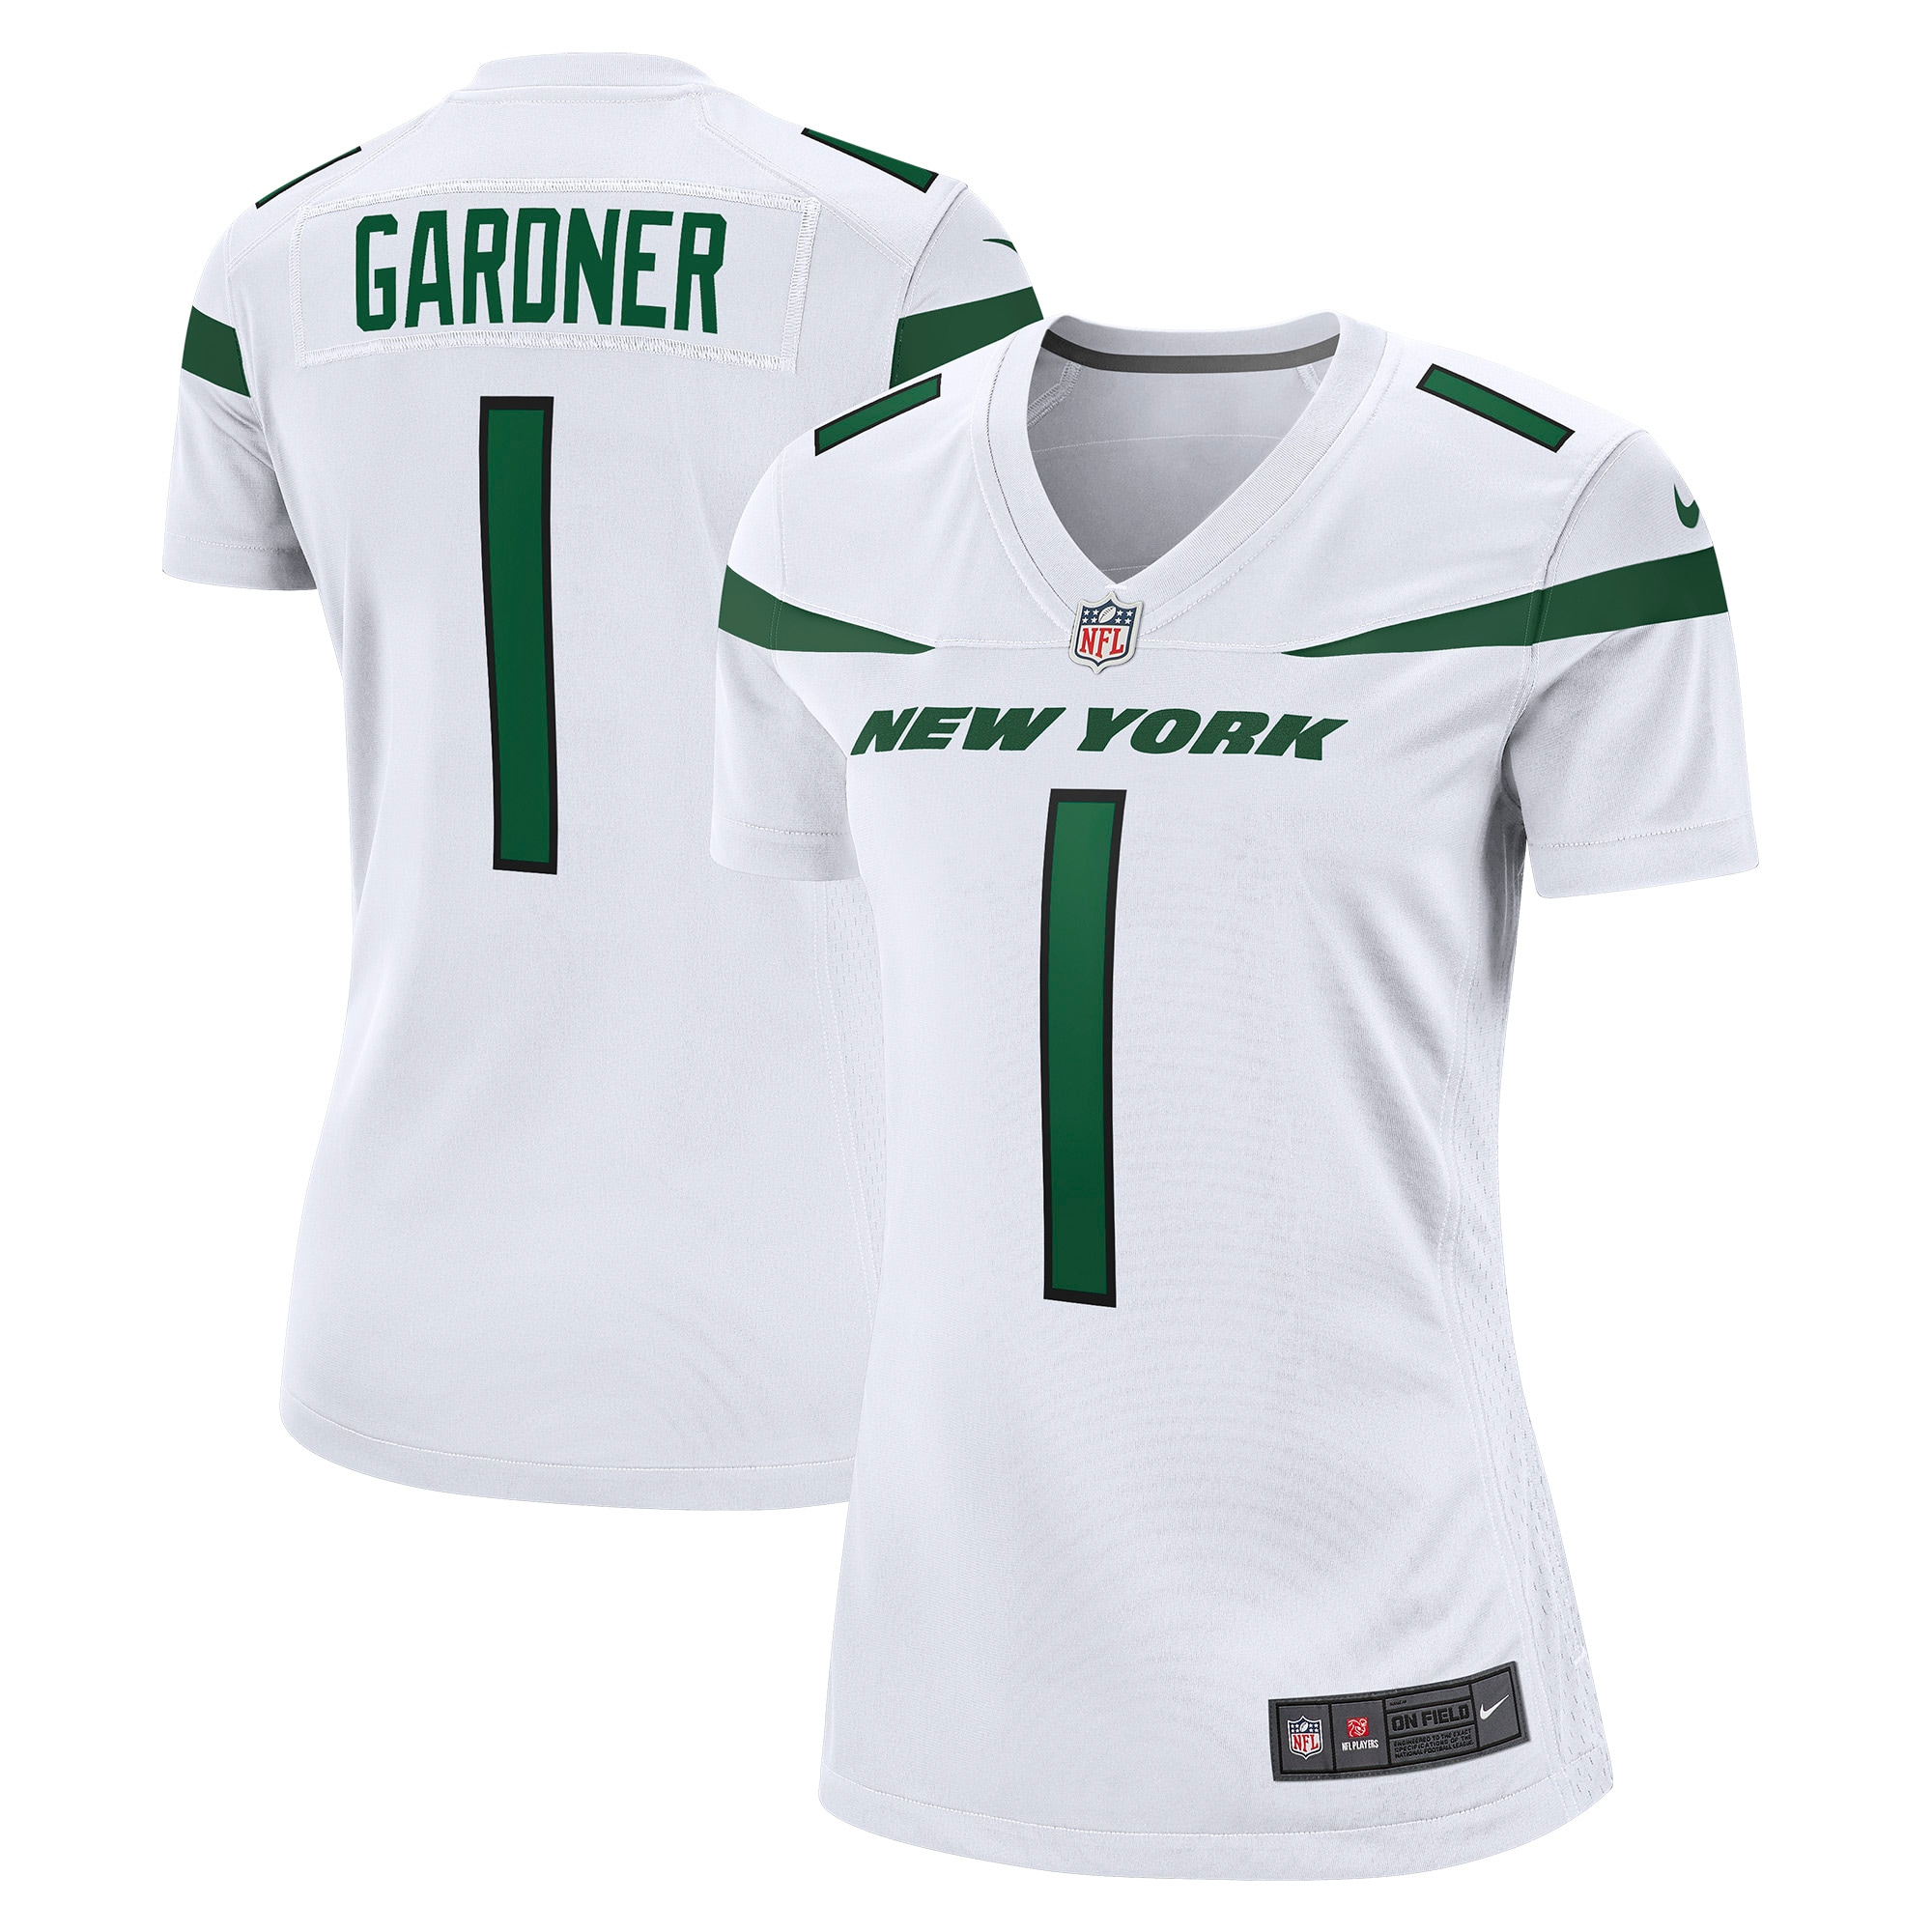 Sauce Gardner: NY Jets NFL Draft 2022 pick bio, college